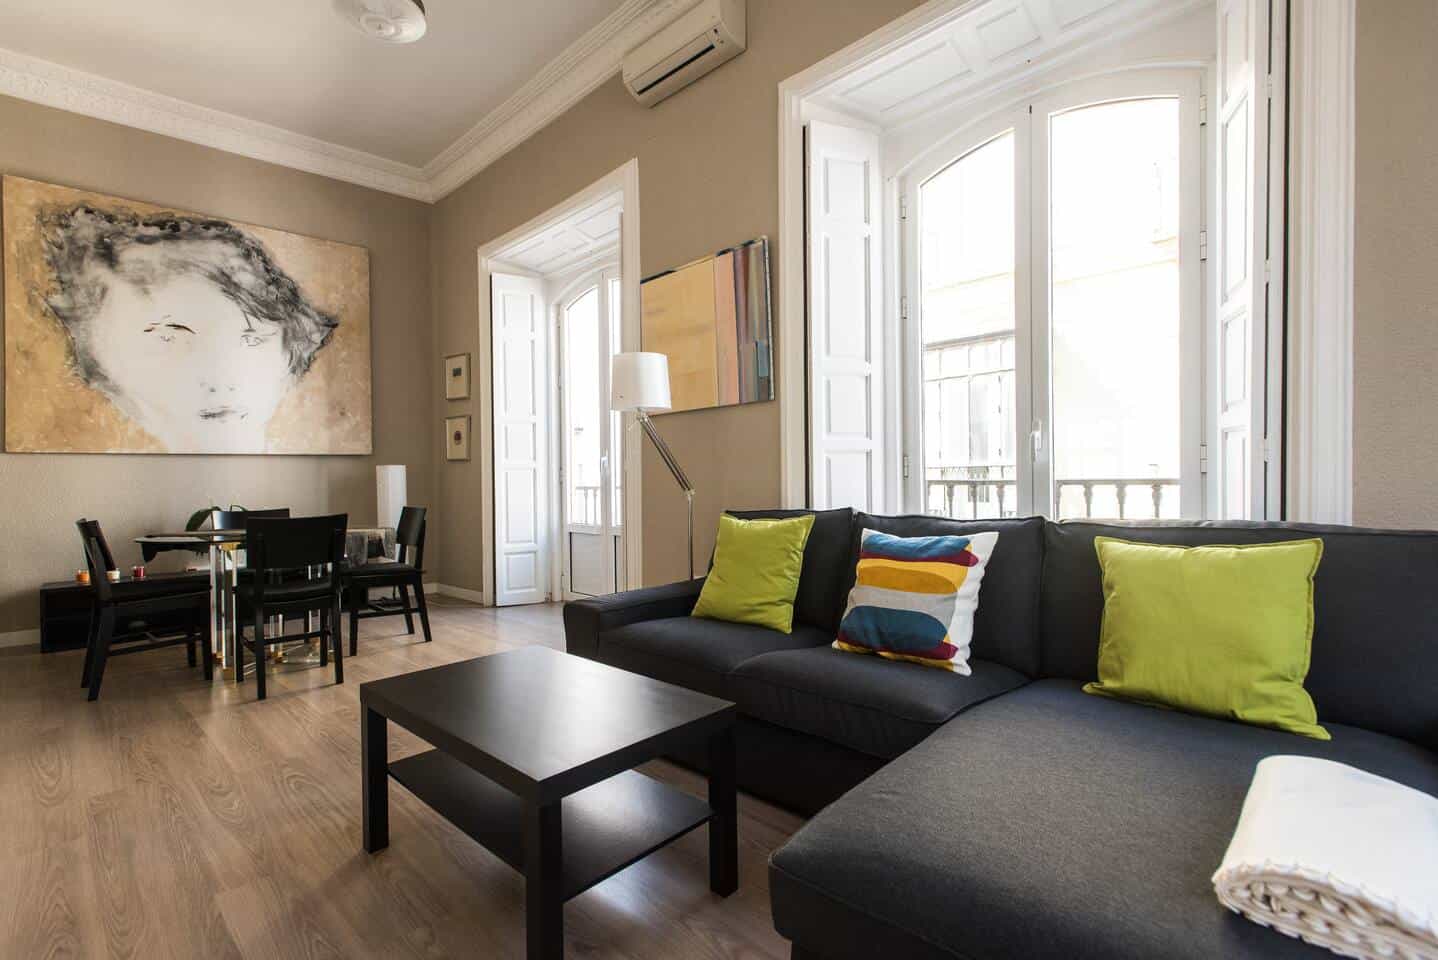 Image of Airbnb rental in Seville, Spain